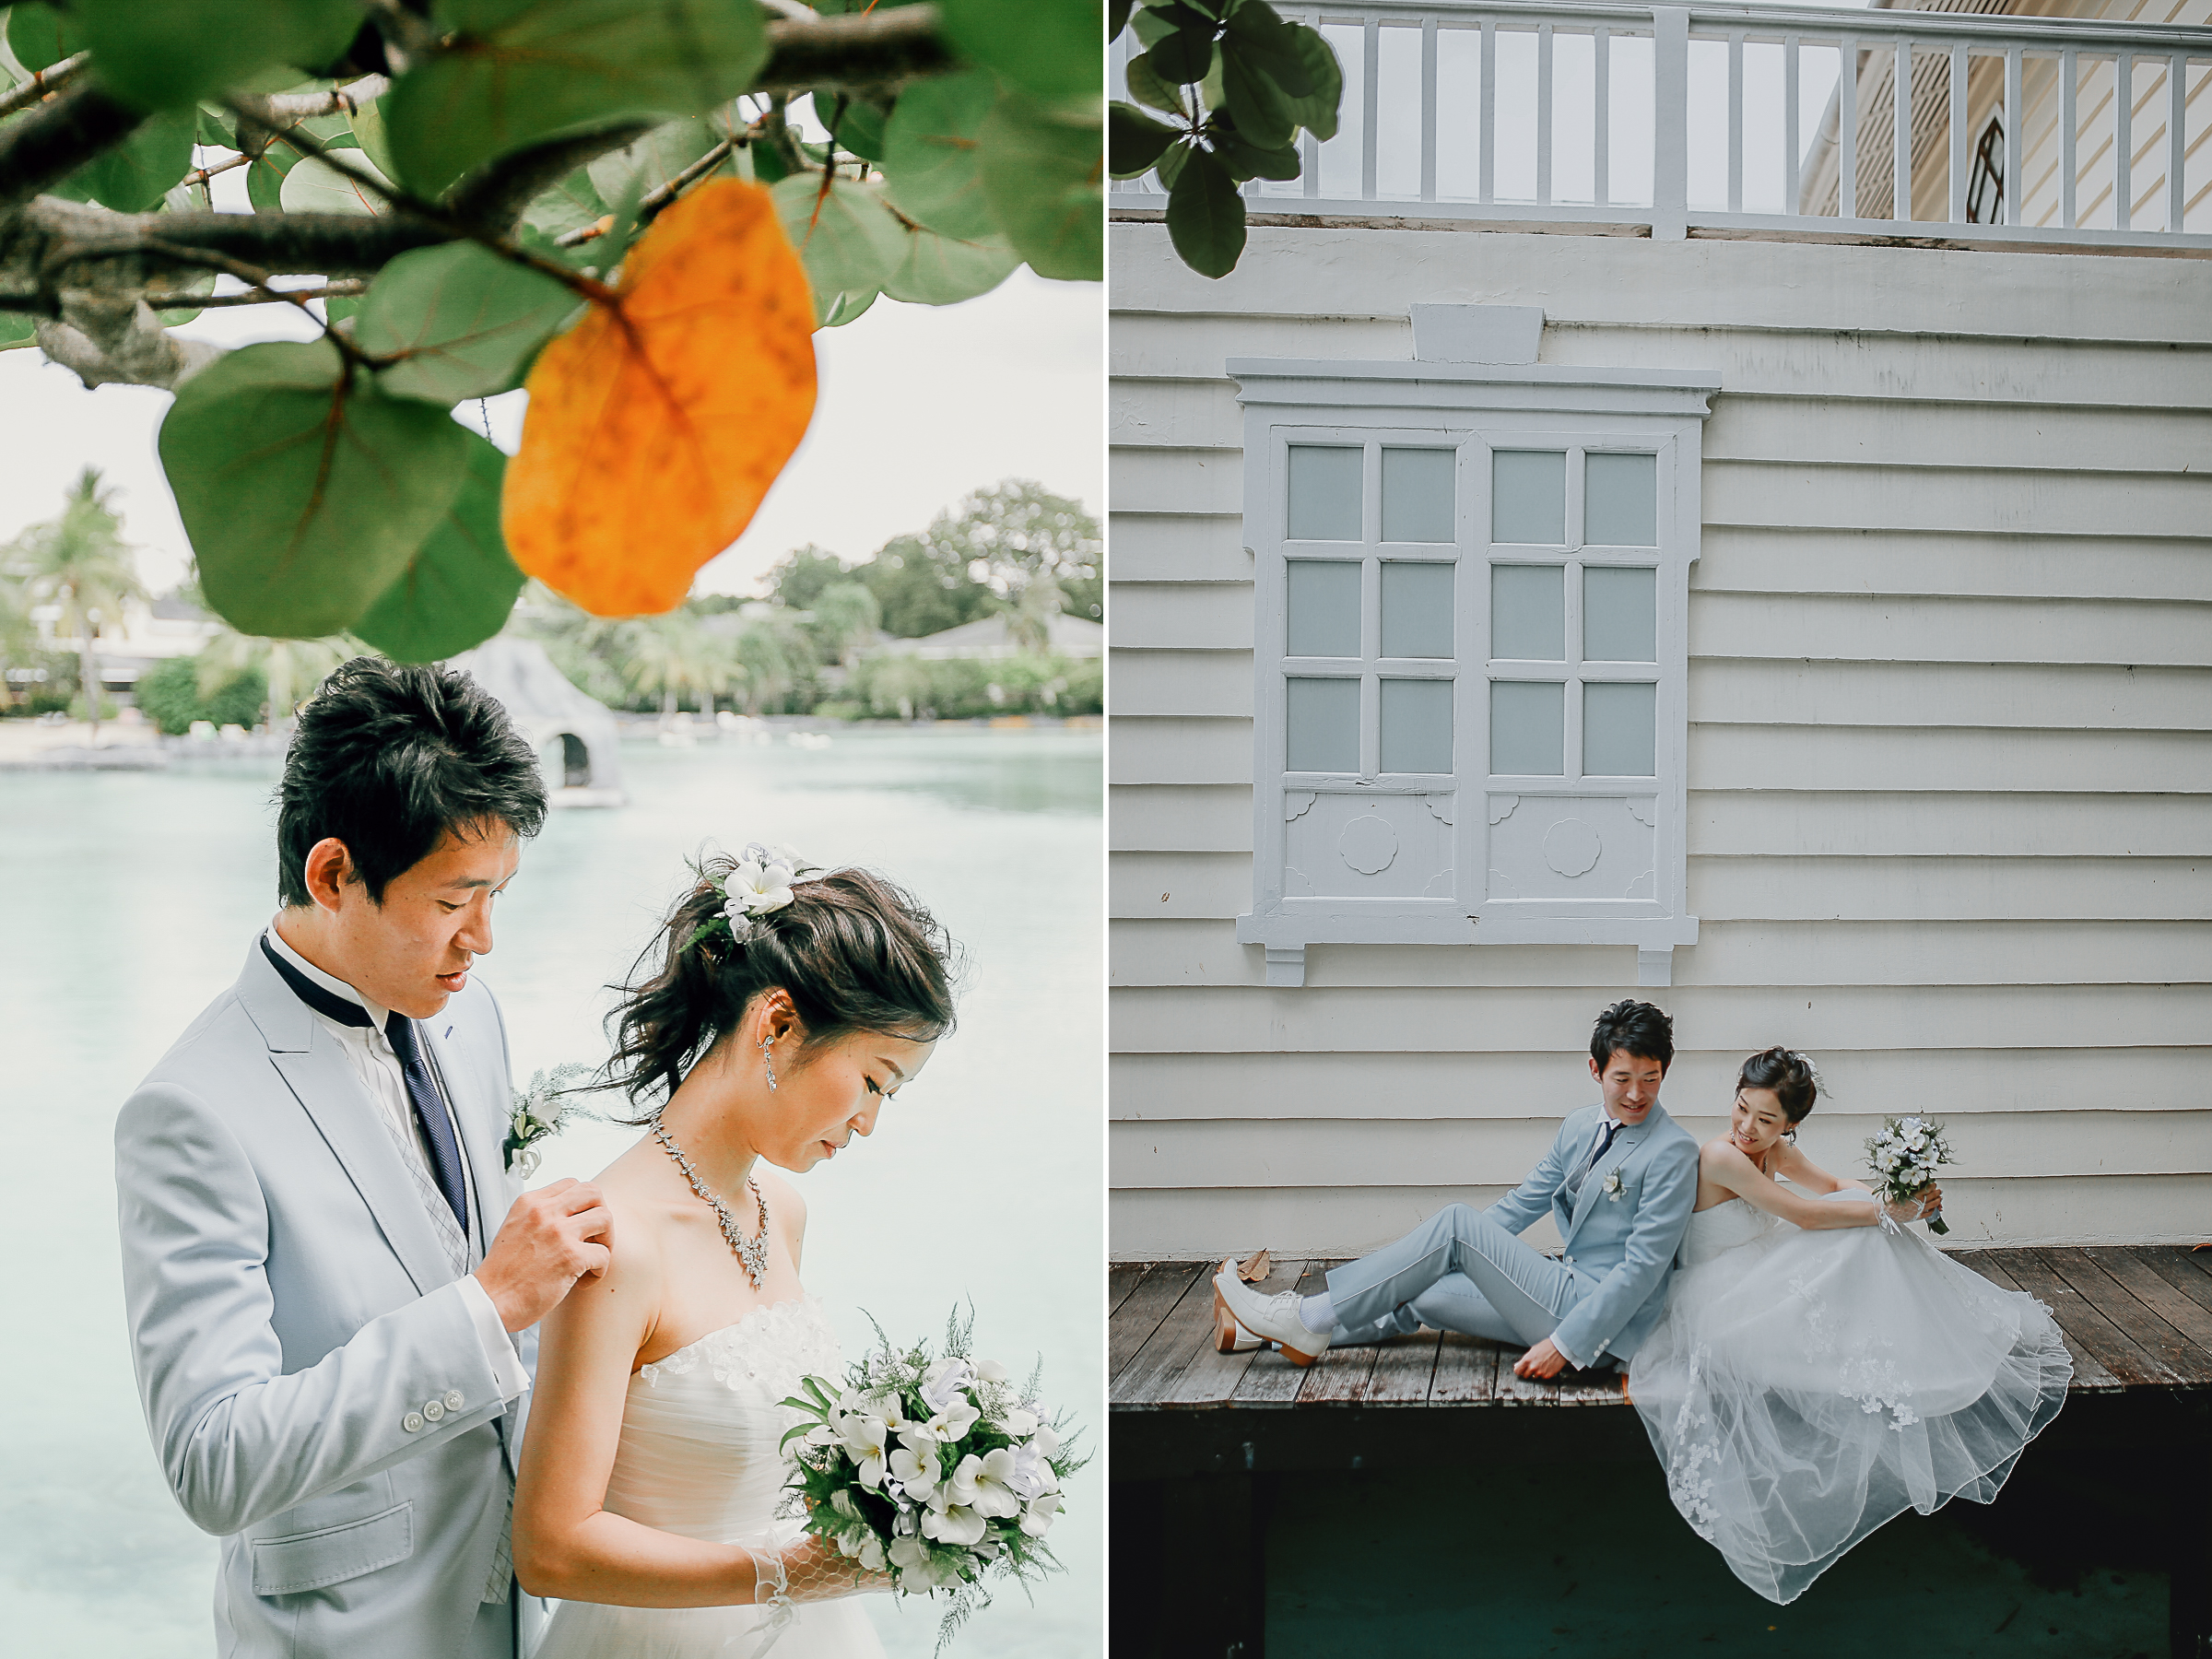 plantation bay intimate wedding yoshi and anna 0002 - Plantation Bay Intimate Wedding - Yoshi & Anna